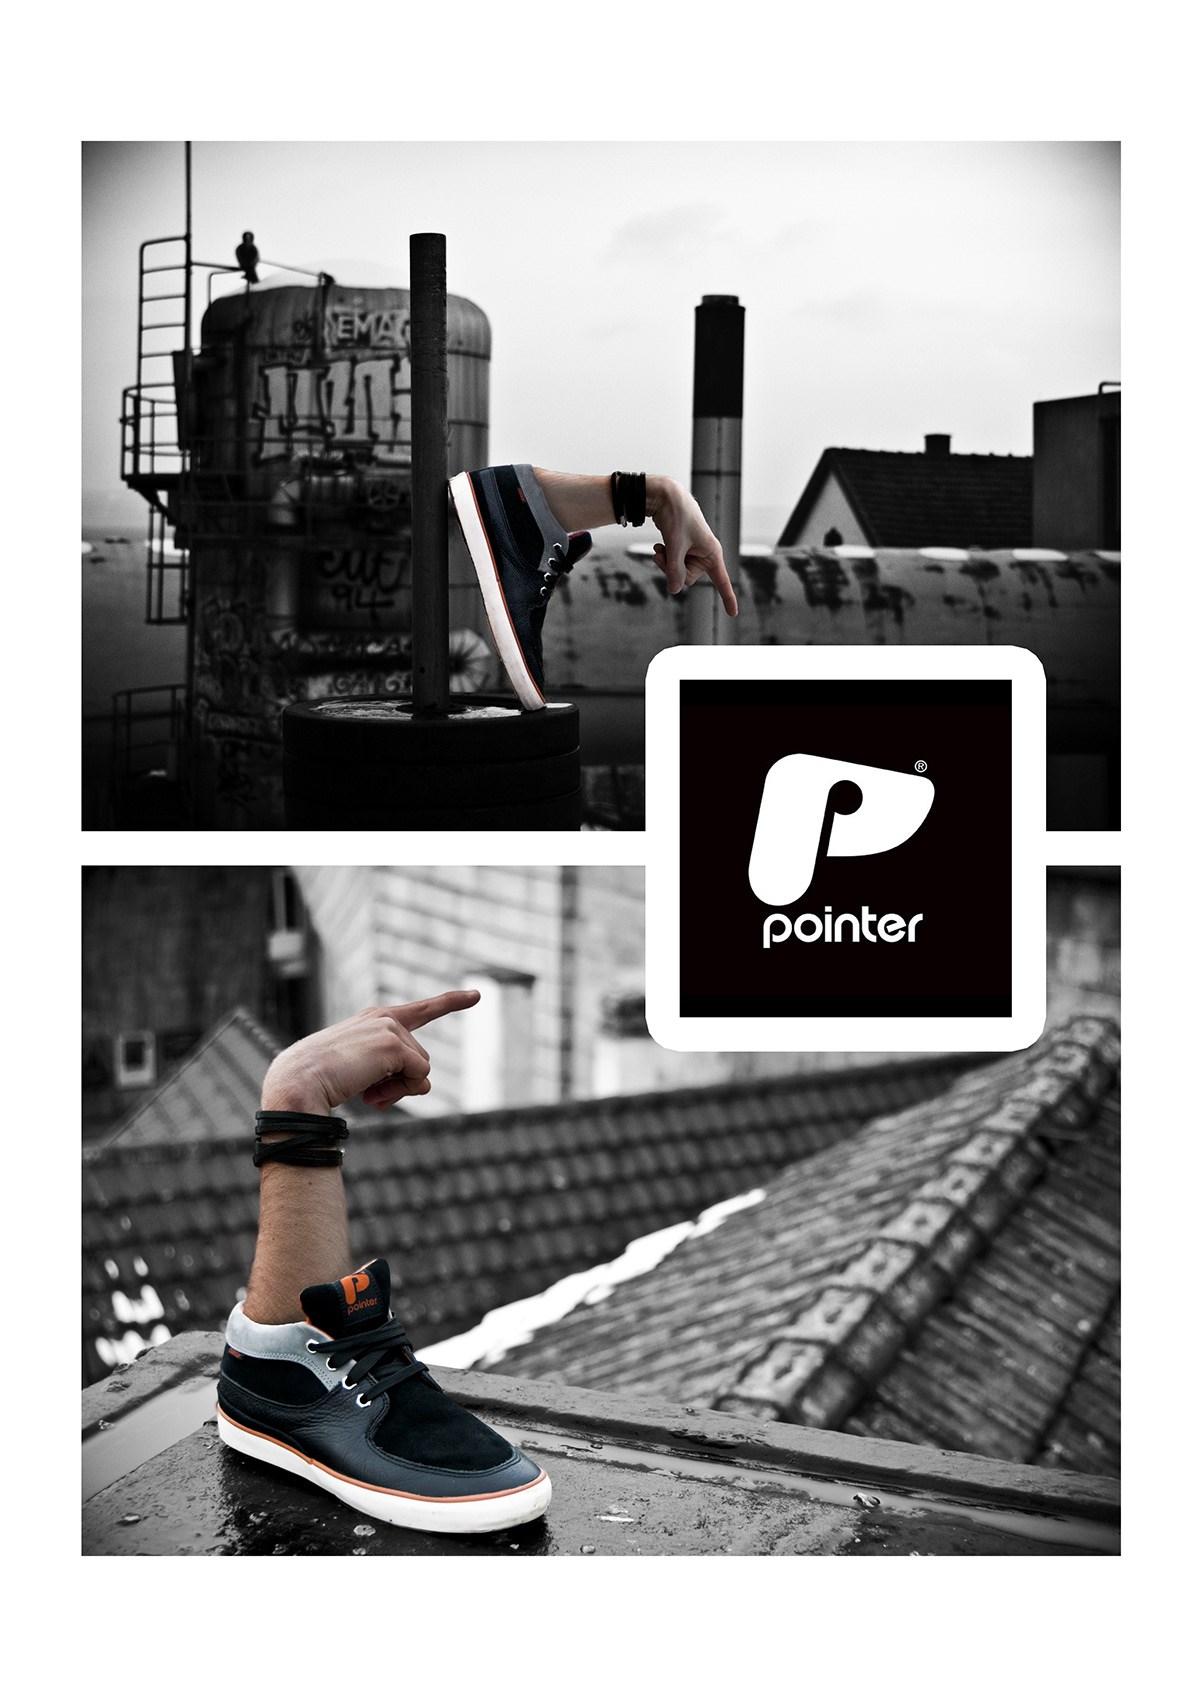 shoes Pointer hand point Urban black White ad magazine poster